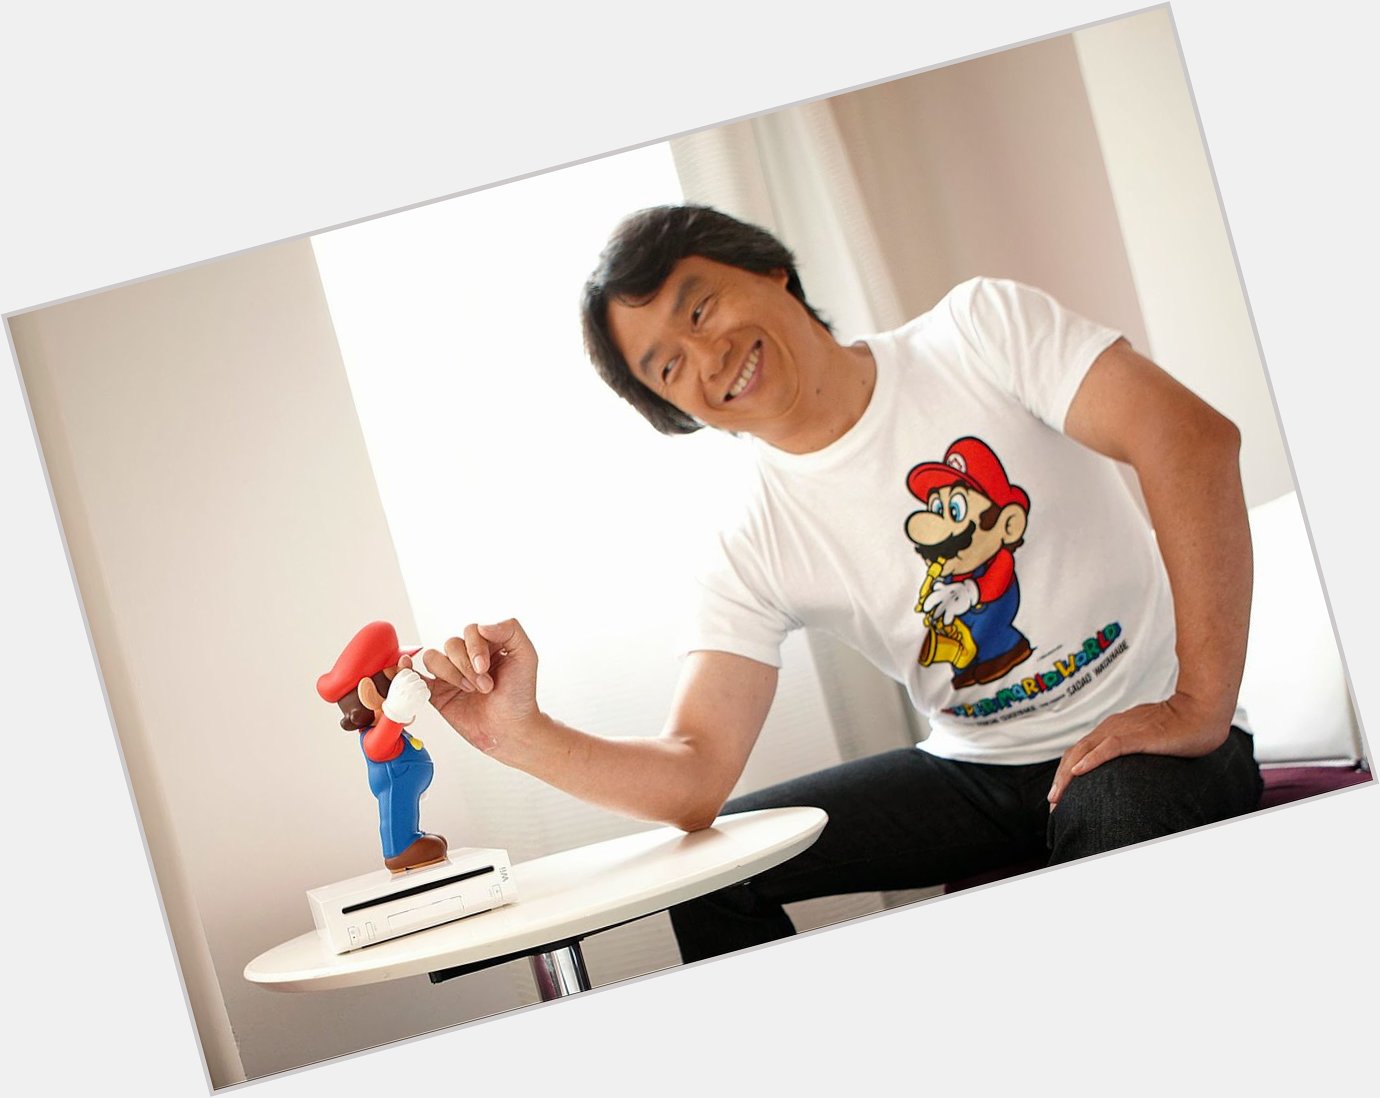 Nintendo LEGEND Shigeru Miyamoto is 63 today!
Happy birthday, Shigeru!  